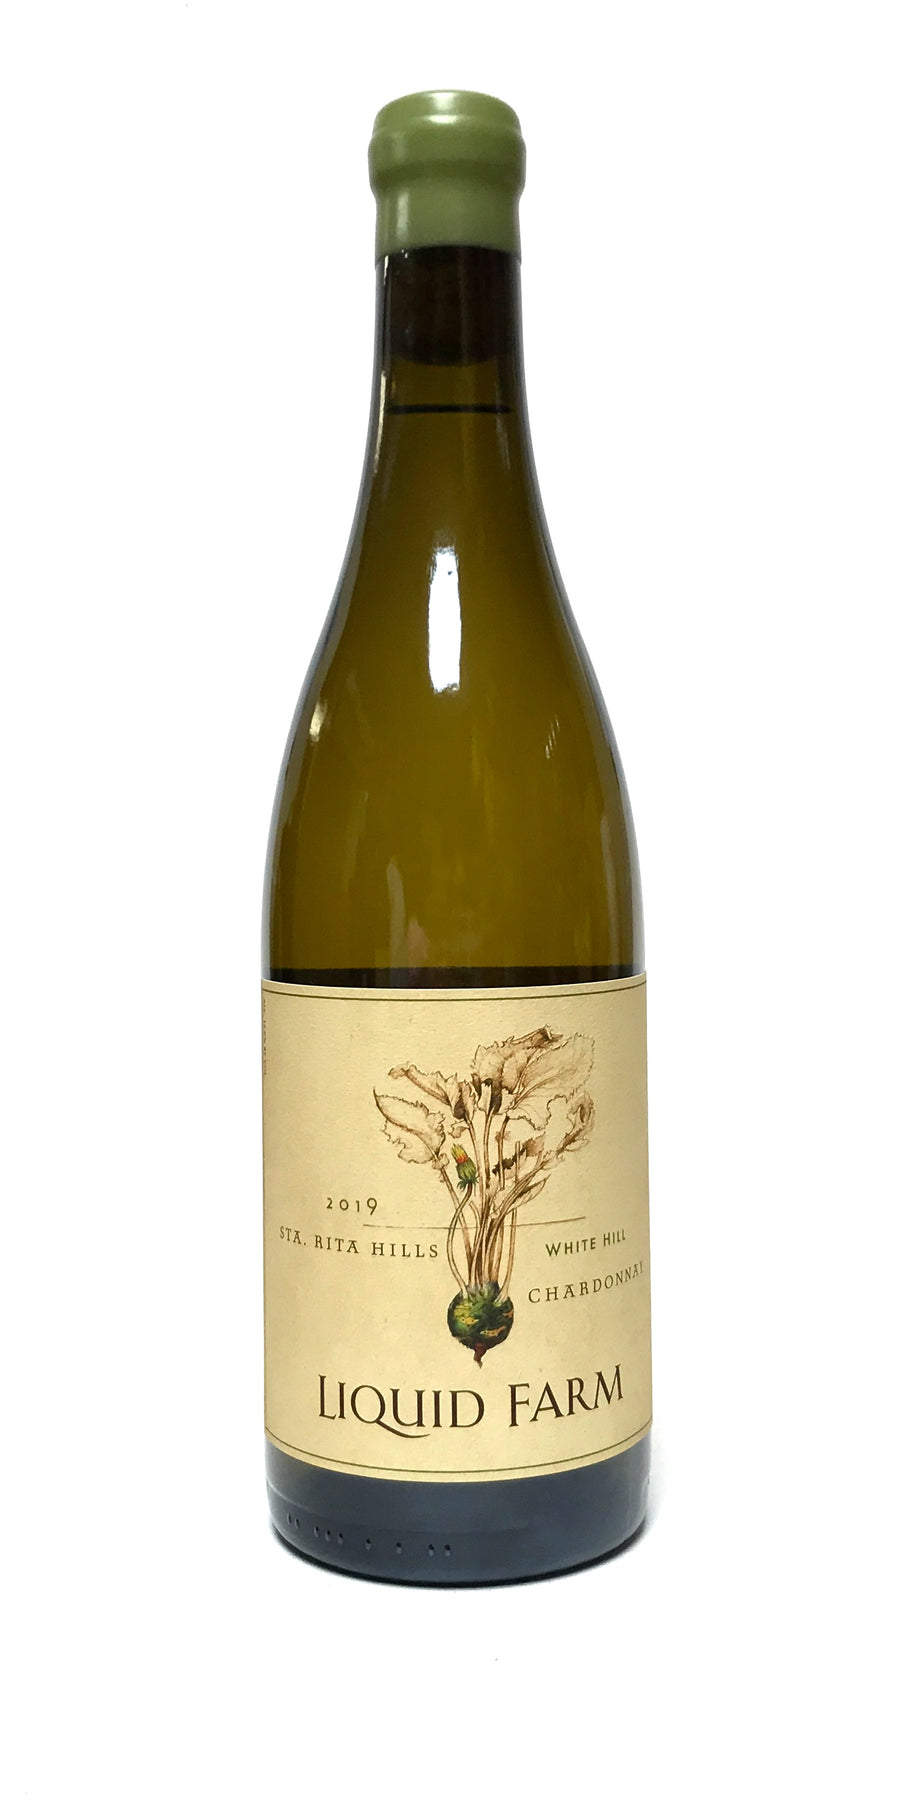 Liquid Farm 2019 Chardonnay “White Hill” Sta. Rita Hills